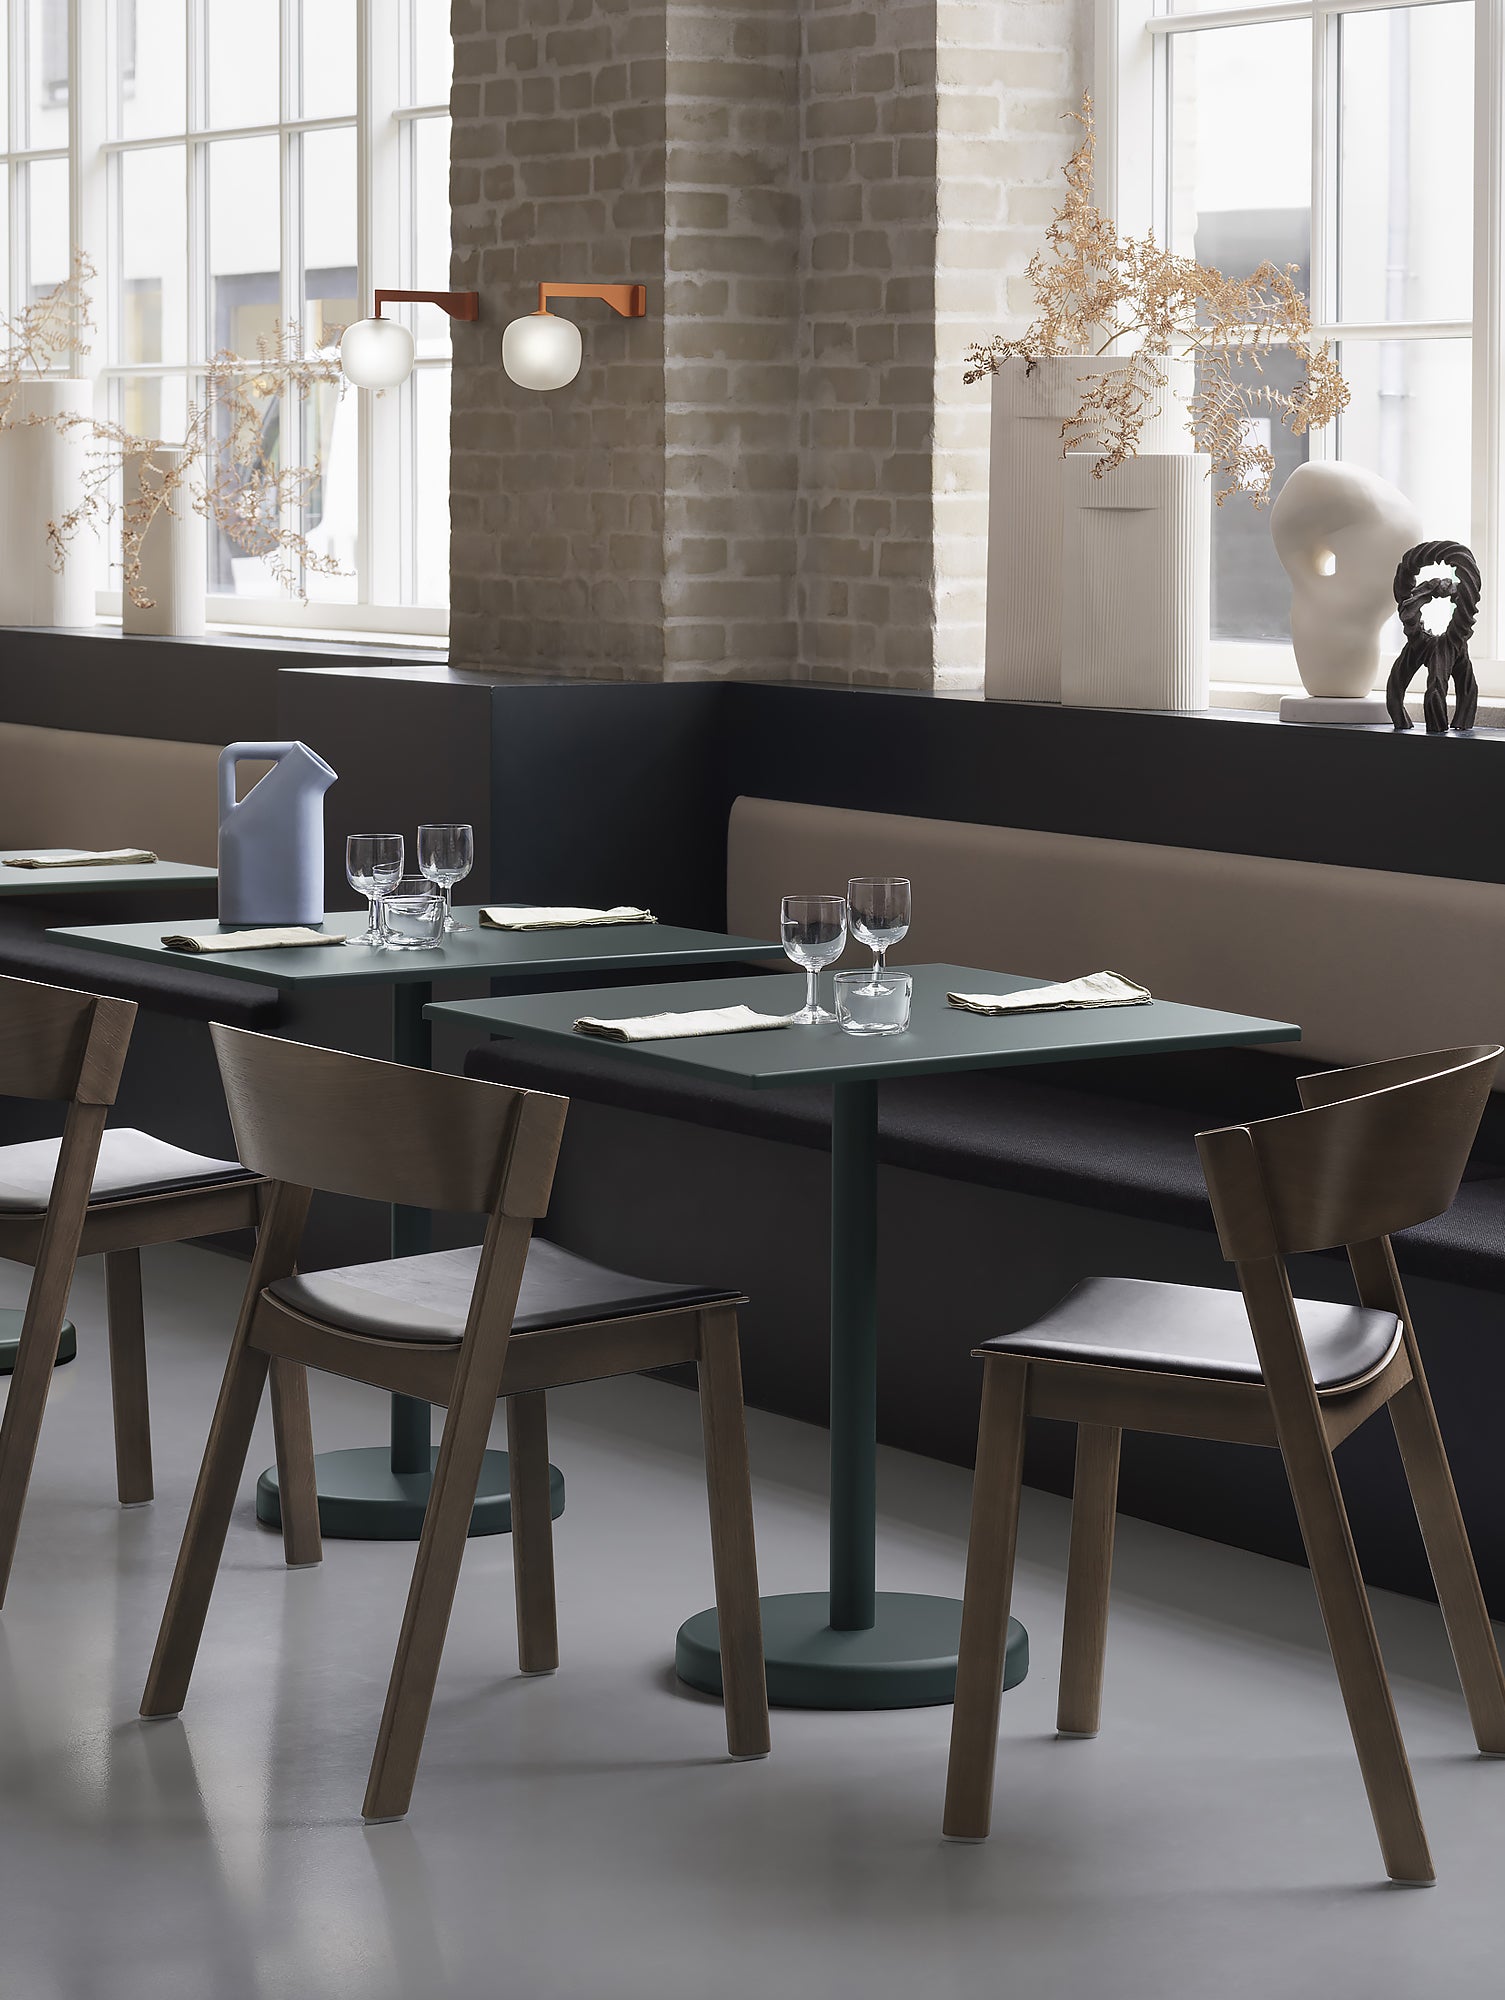 Linear Steel Café Table - Square, Dark Green